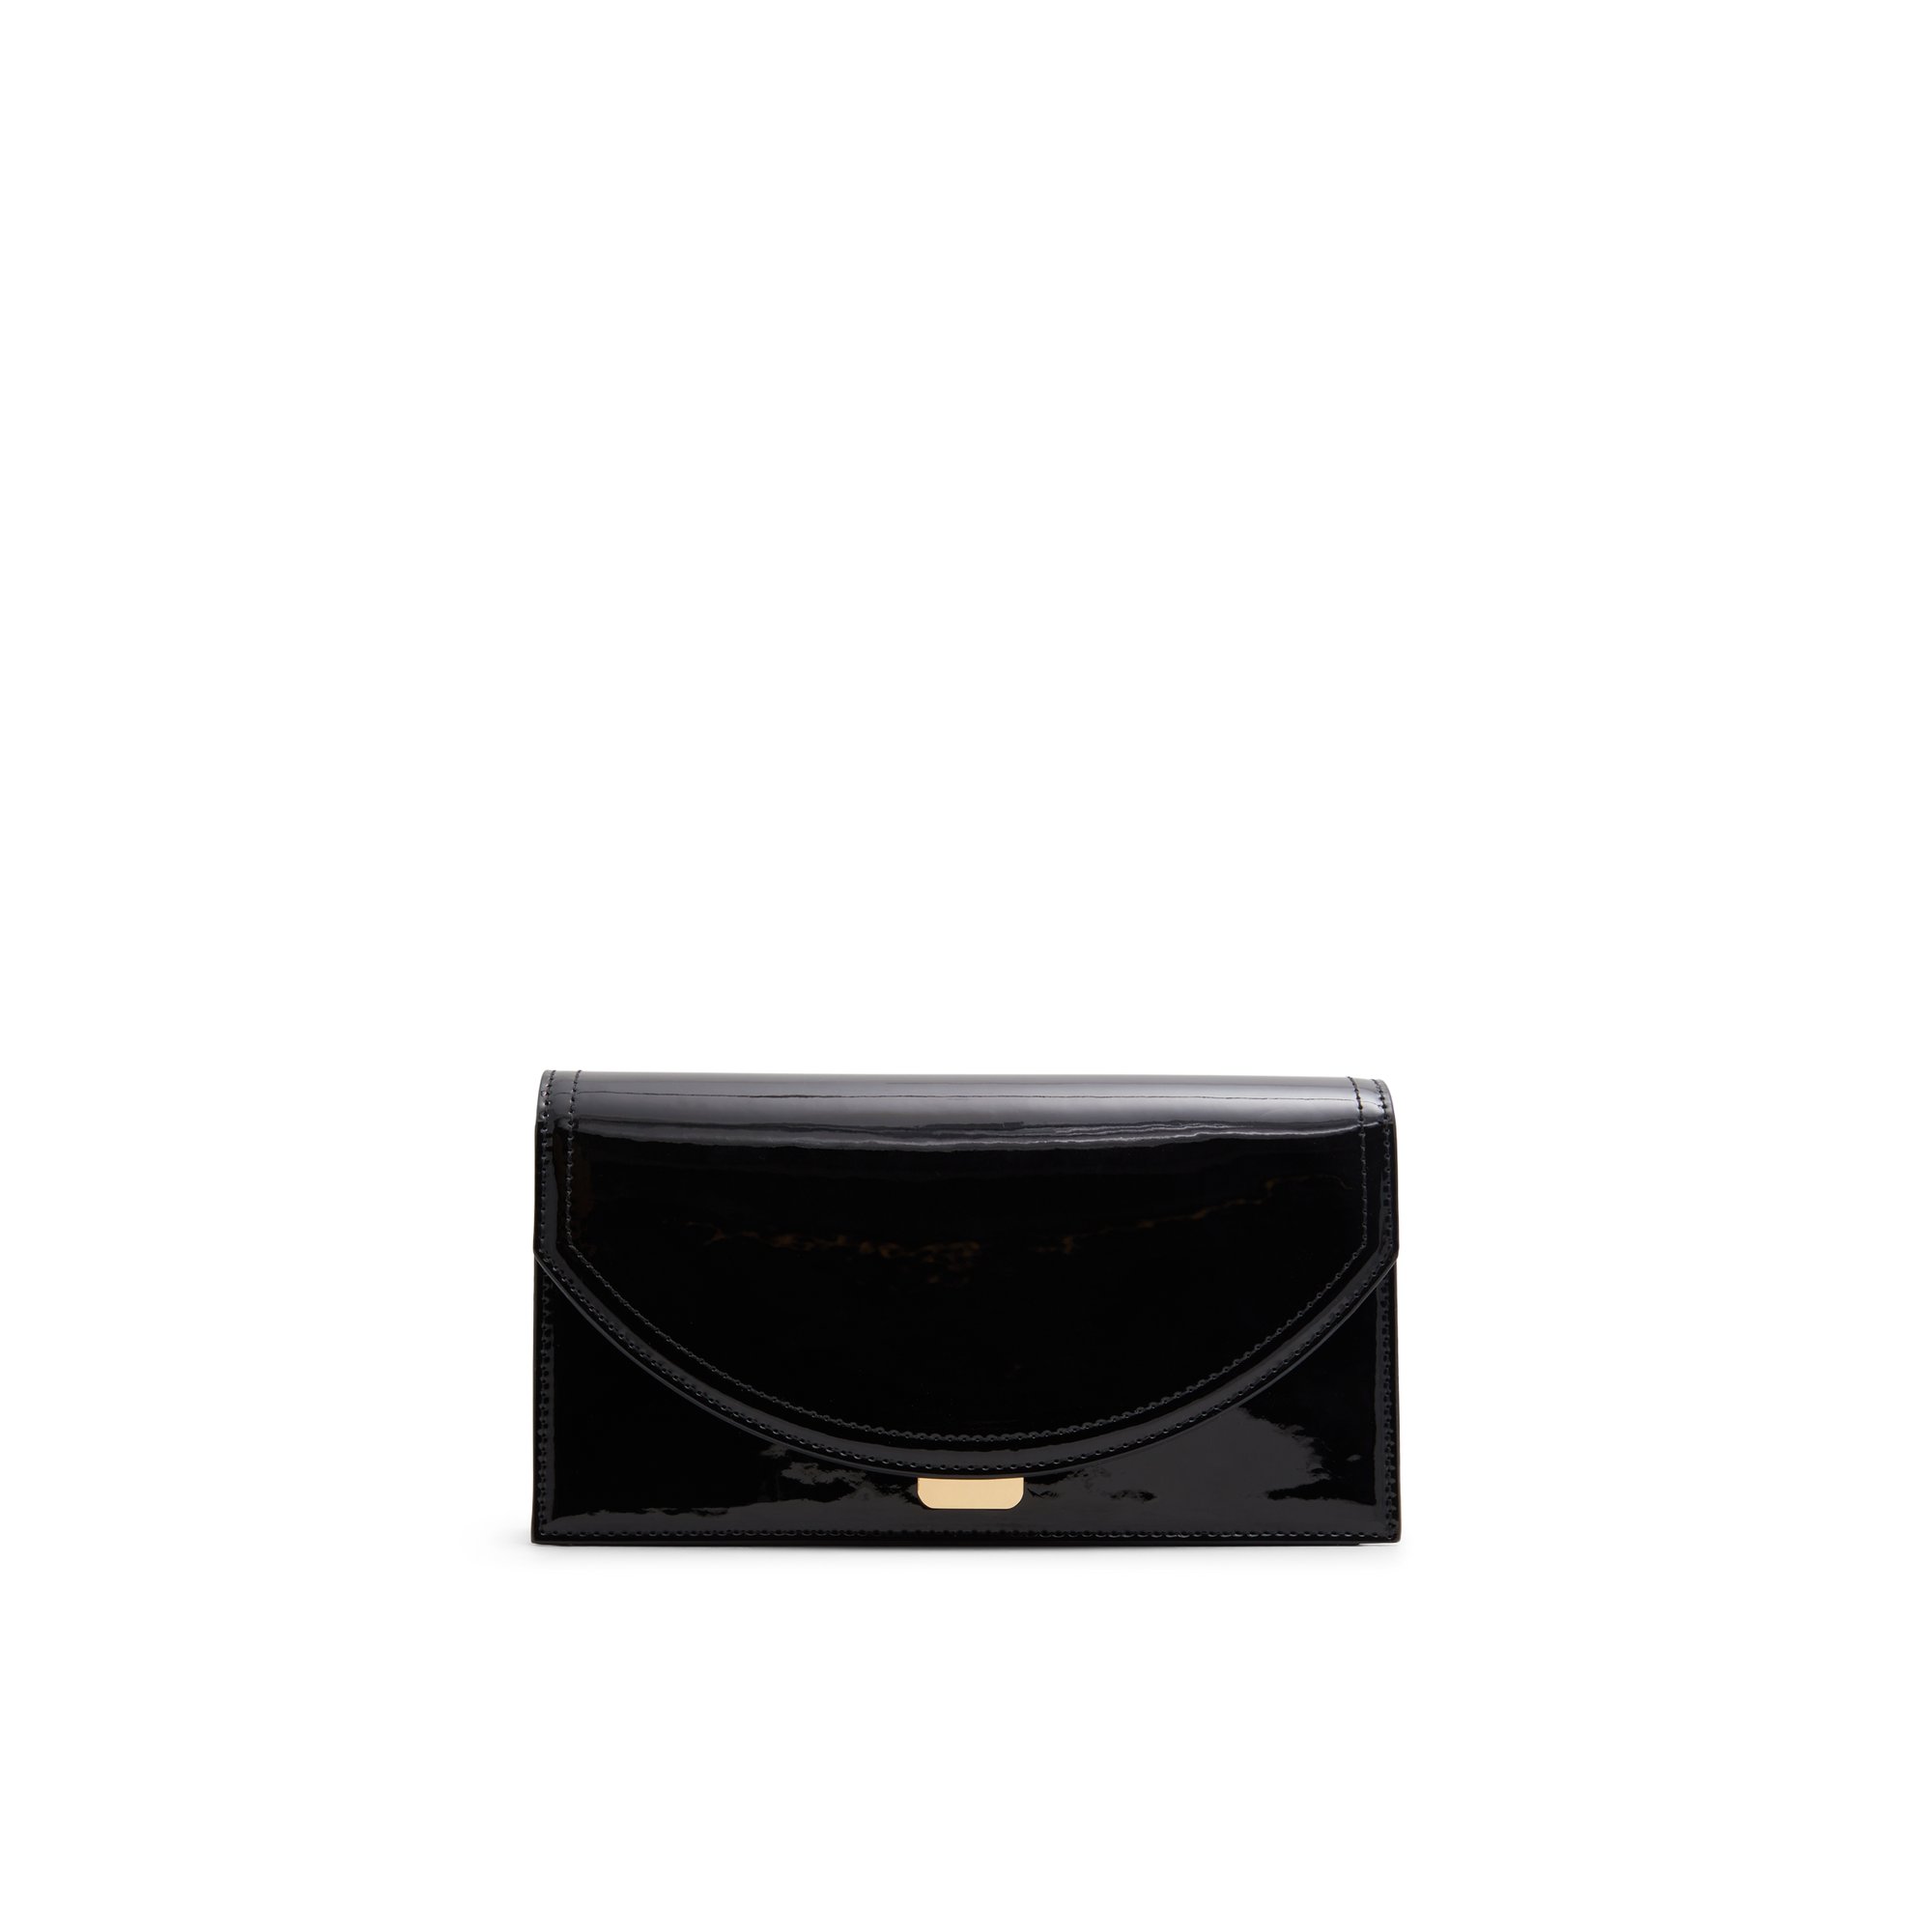 ALDO Kalonnx - Women's Clutches & Evening Bag Handbag - Black